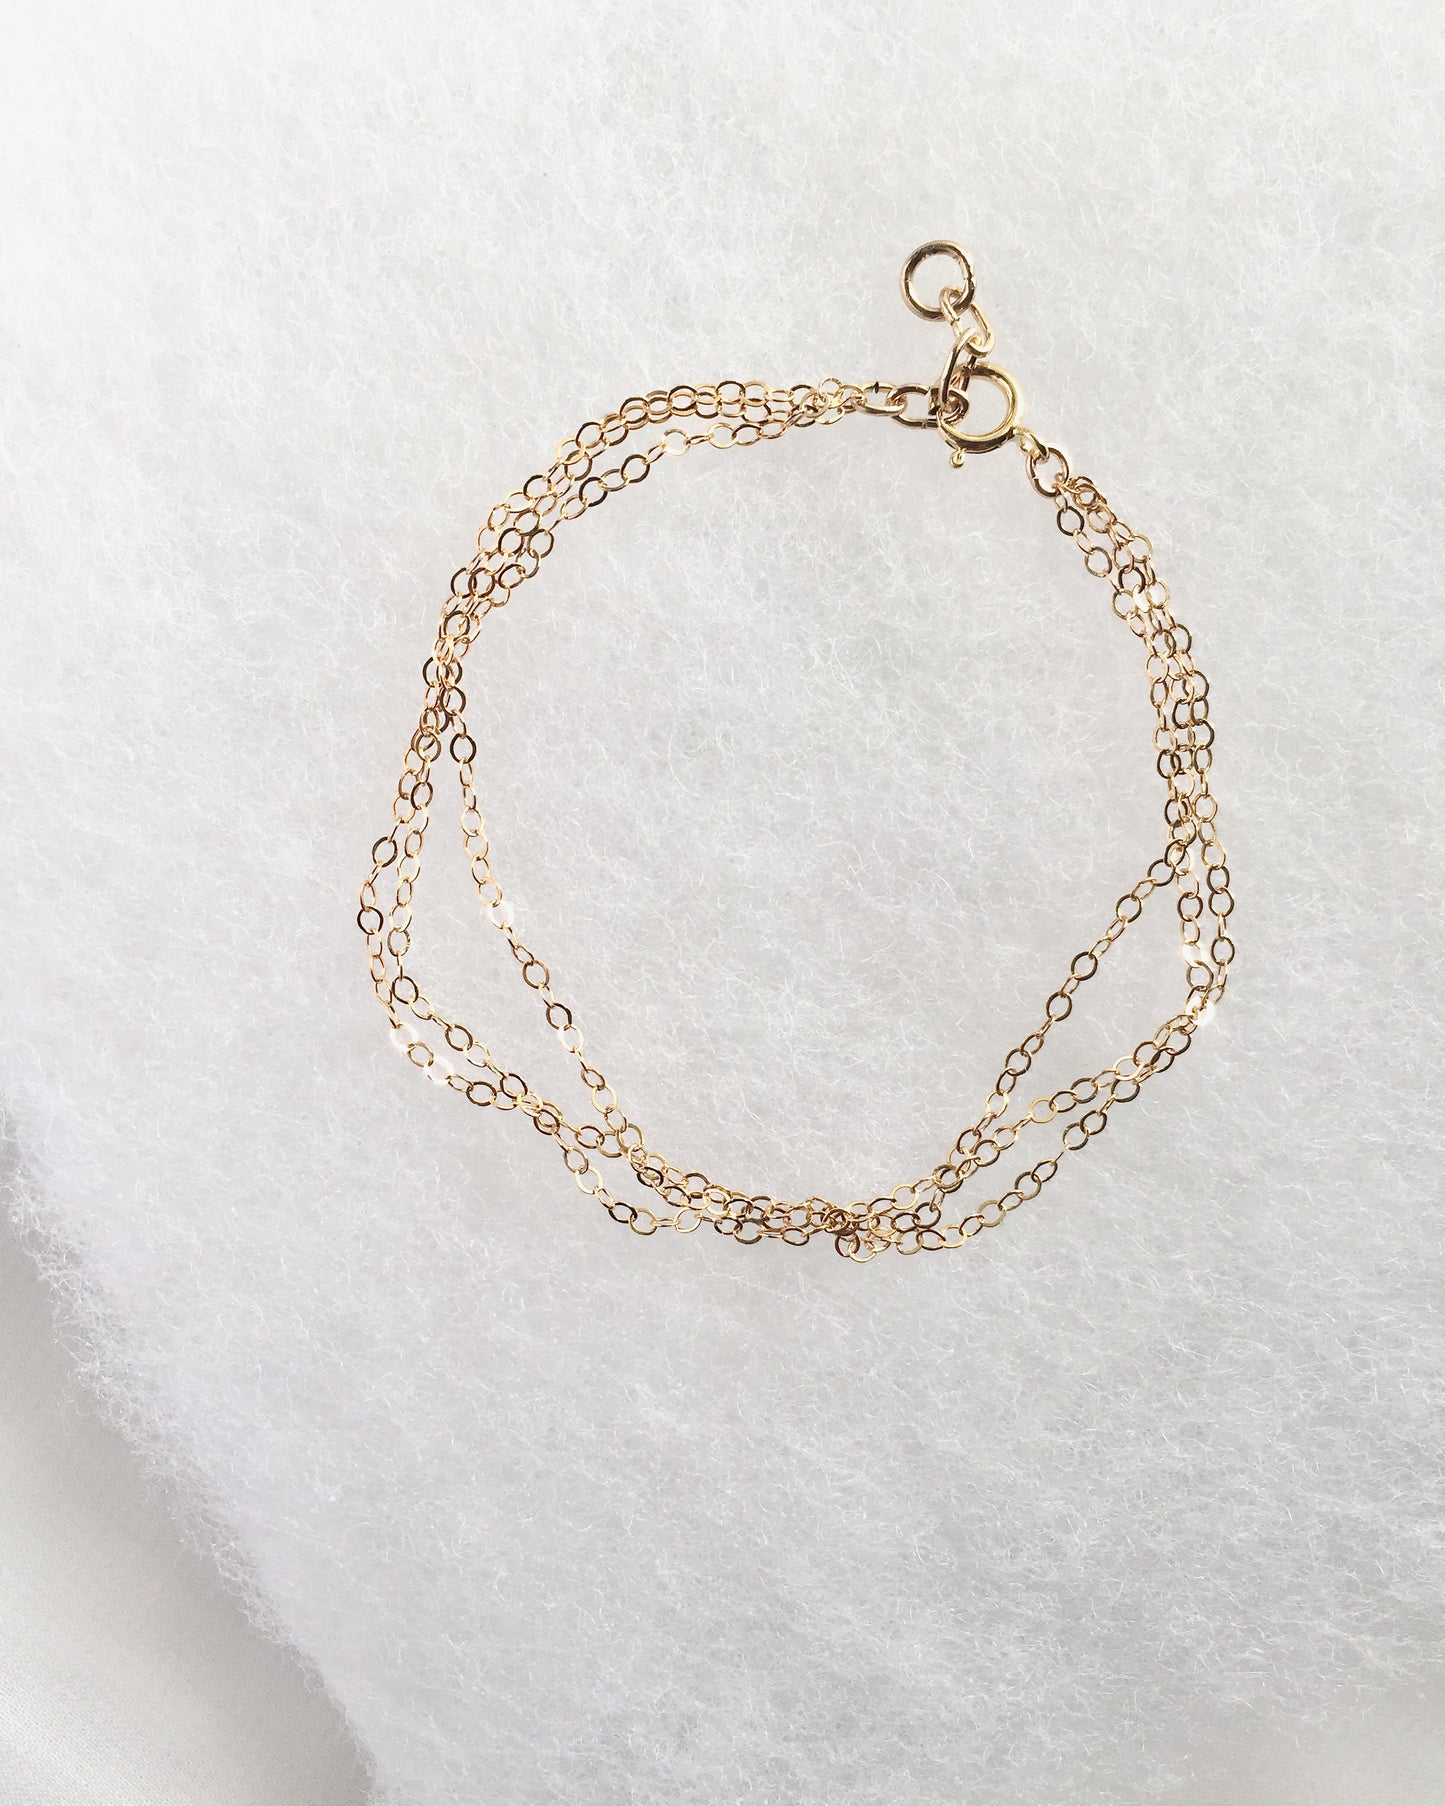 Minimalist Layered Bracelet | Delicate Chain Bracelet | Simple Everyday Bracelet | IB Jewelry